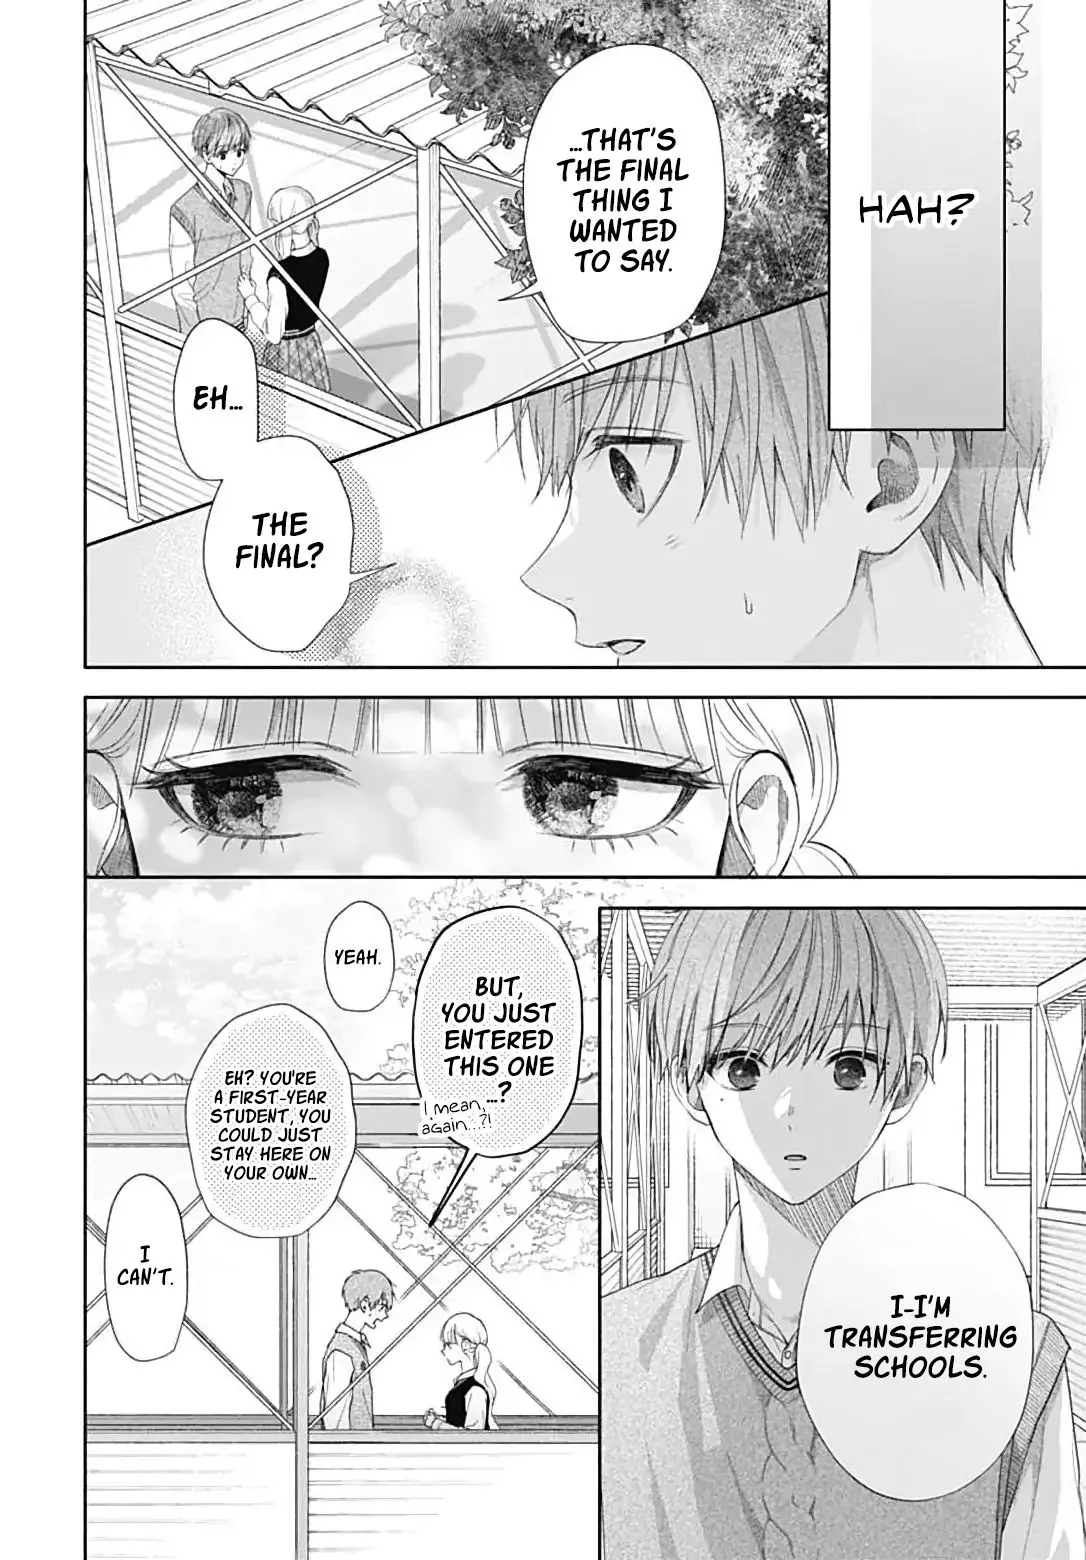 I Hate Komiyama - 2 page 5-51ef9b86